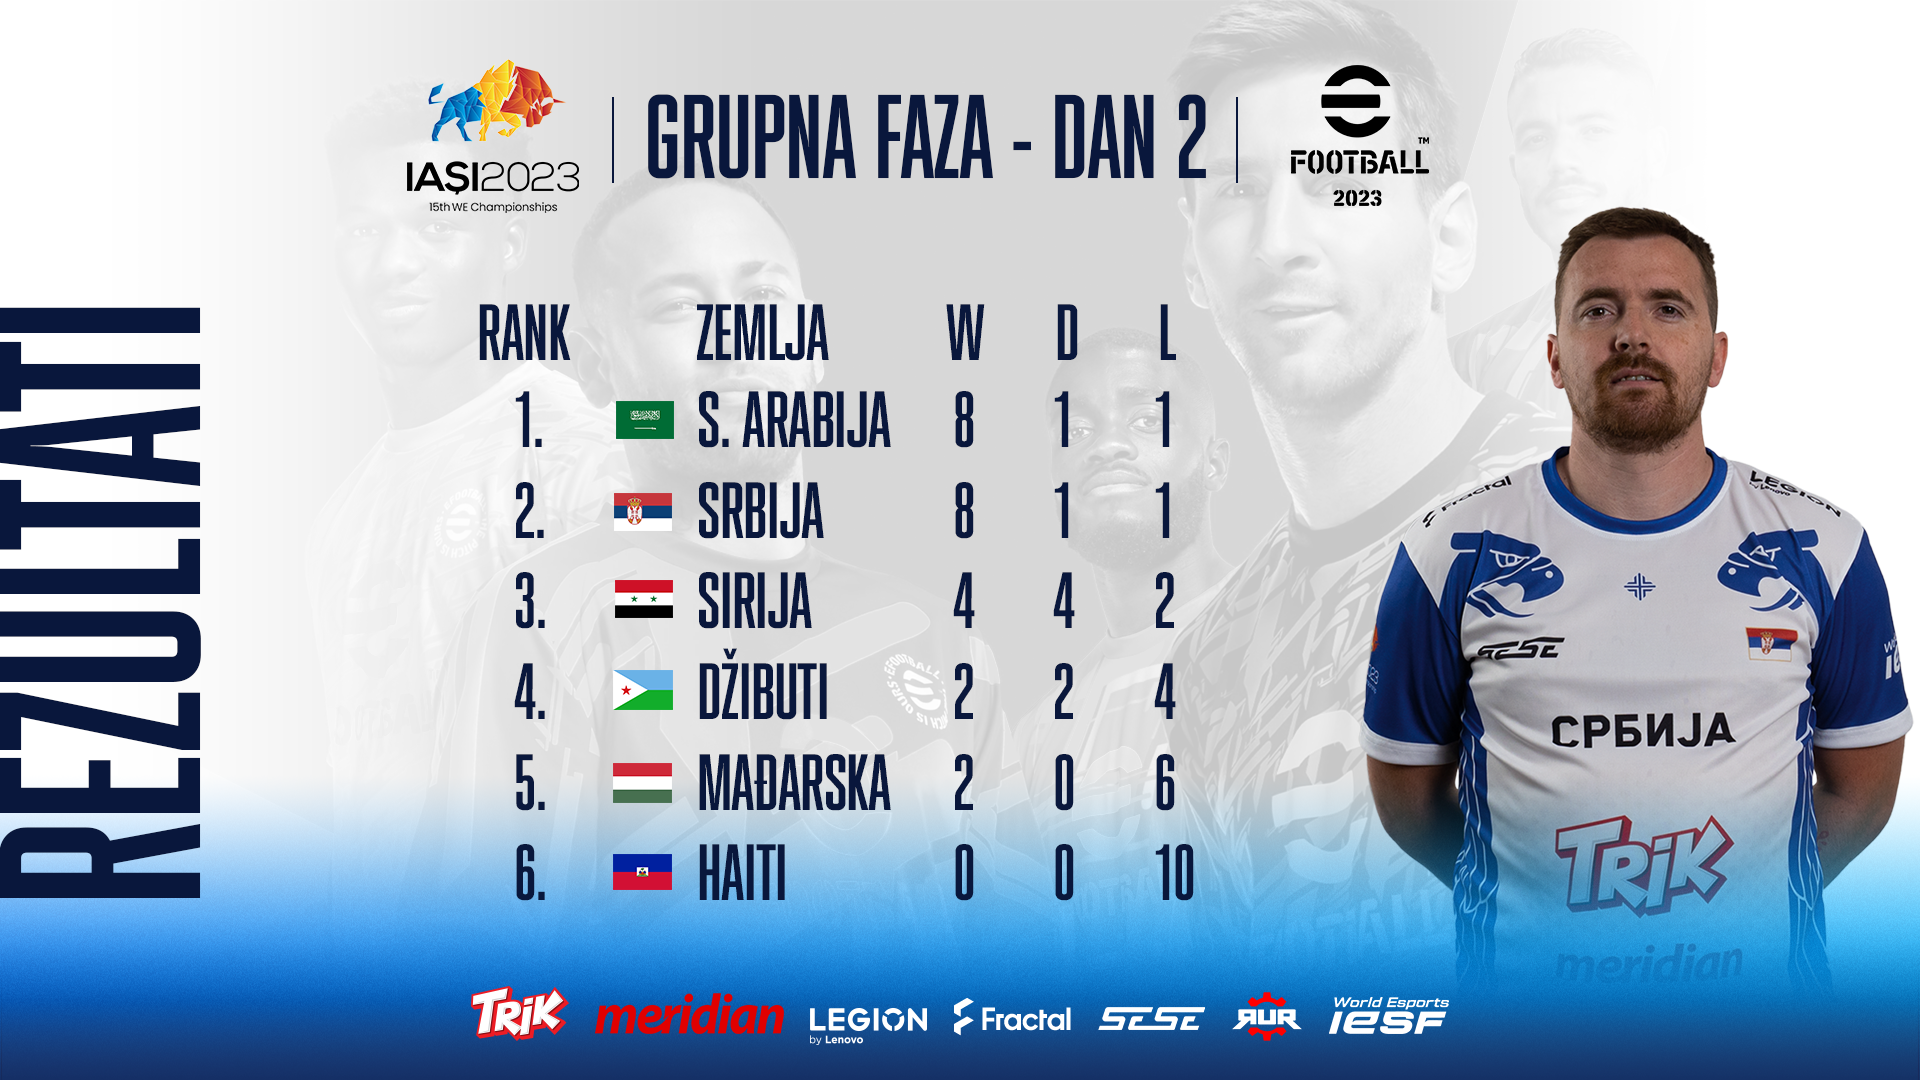 roksa-srbija-efootball-iesf2023-group-results1